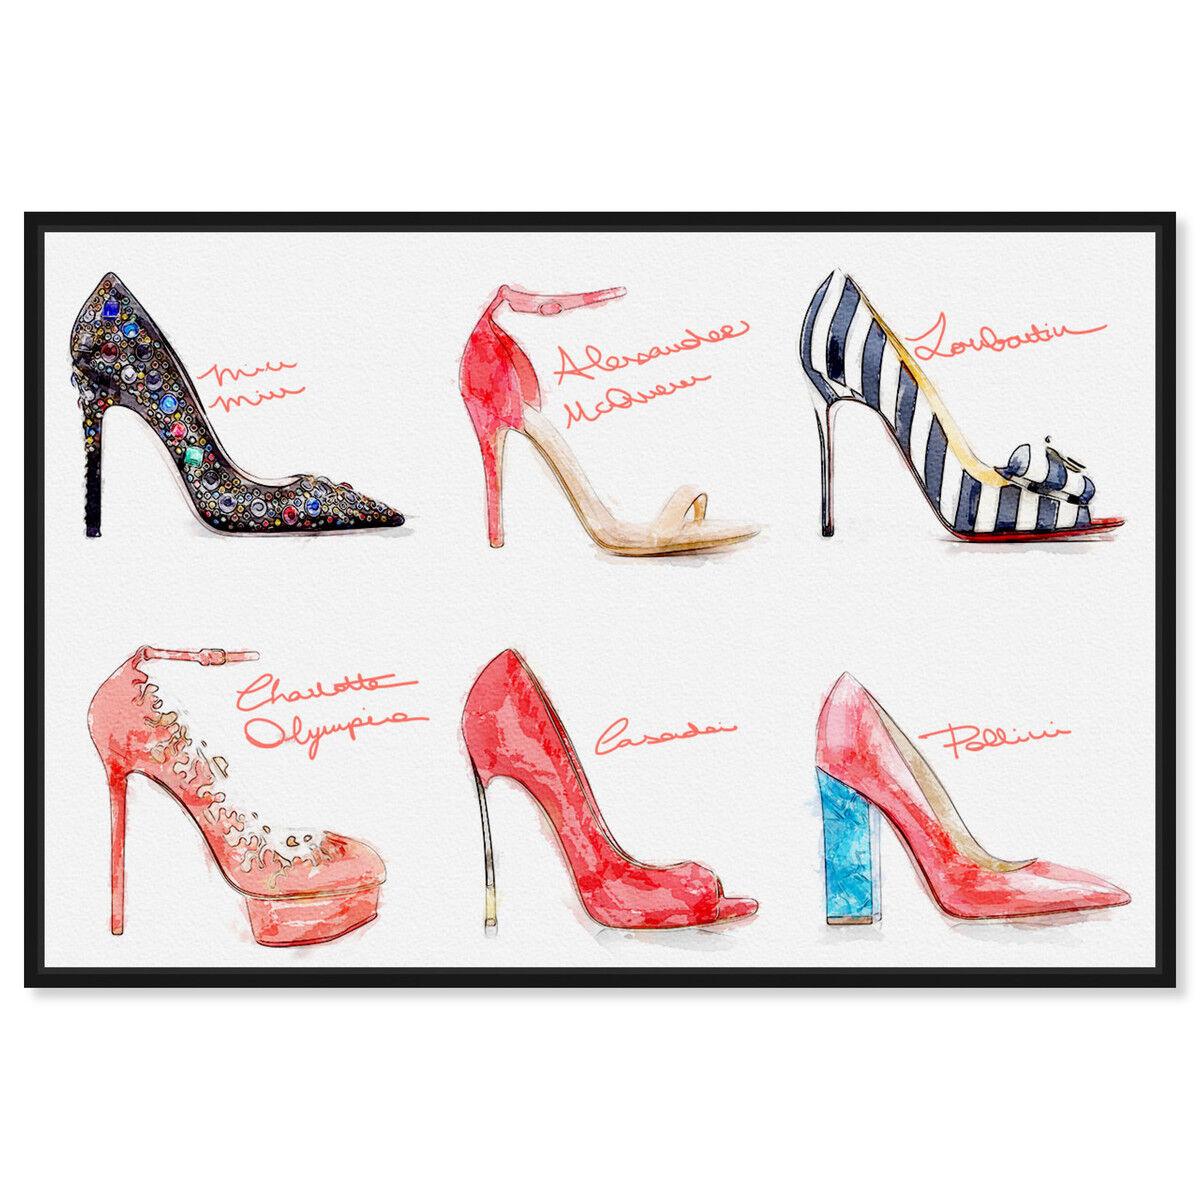 Women Leather Heels Shoes Fashion Illustration Art Print 